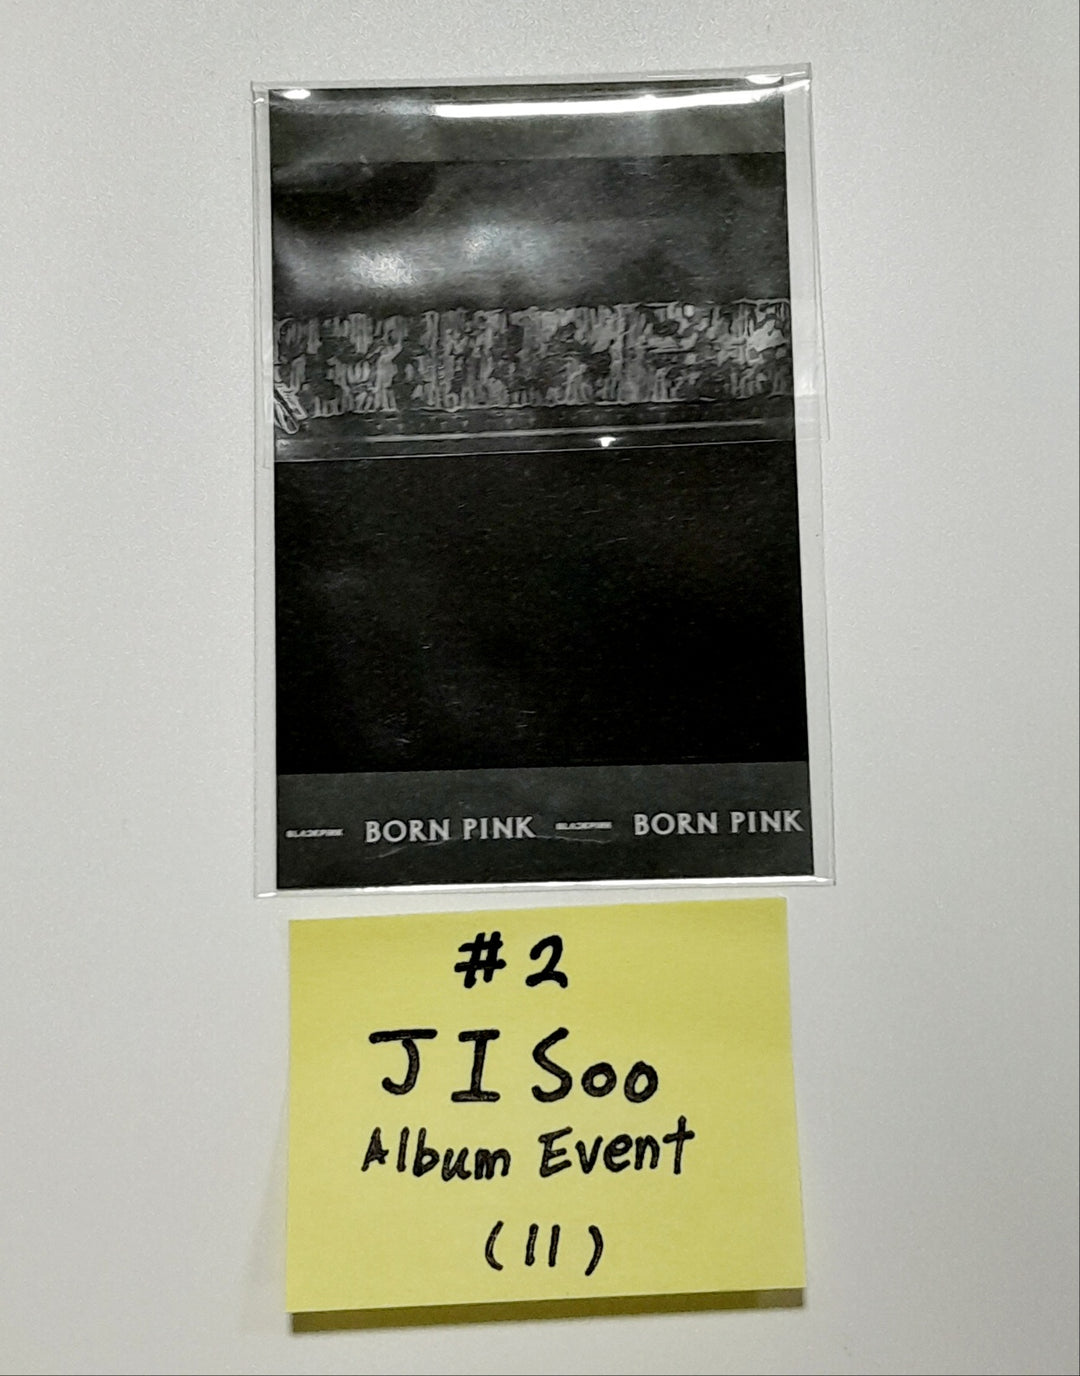 BlackPink - "Born Pink" World Tour Finale in Seoul - Album Event Polaroid Type Photocard [23.09.16] [Restocked 9/18]